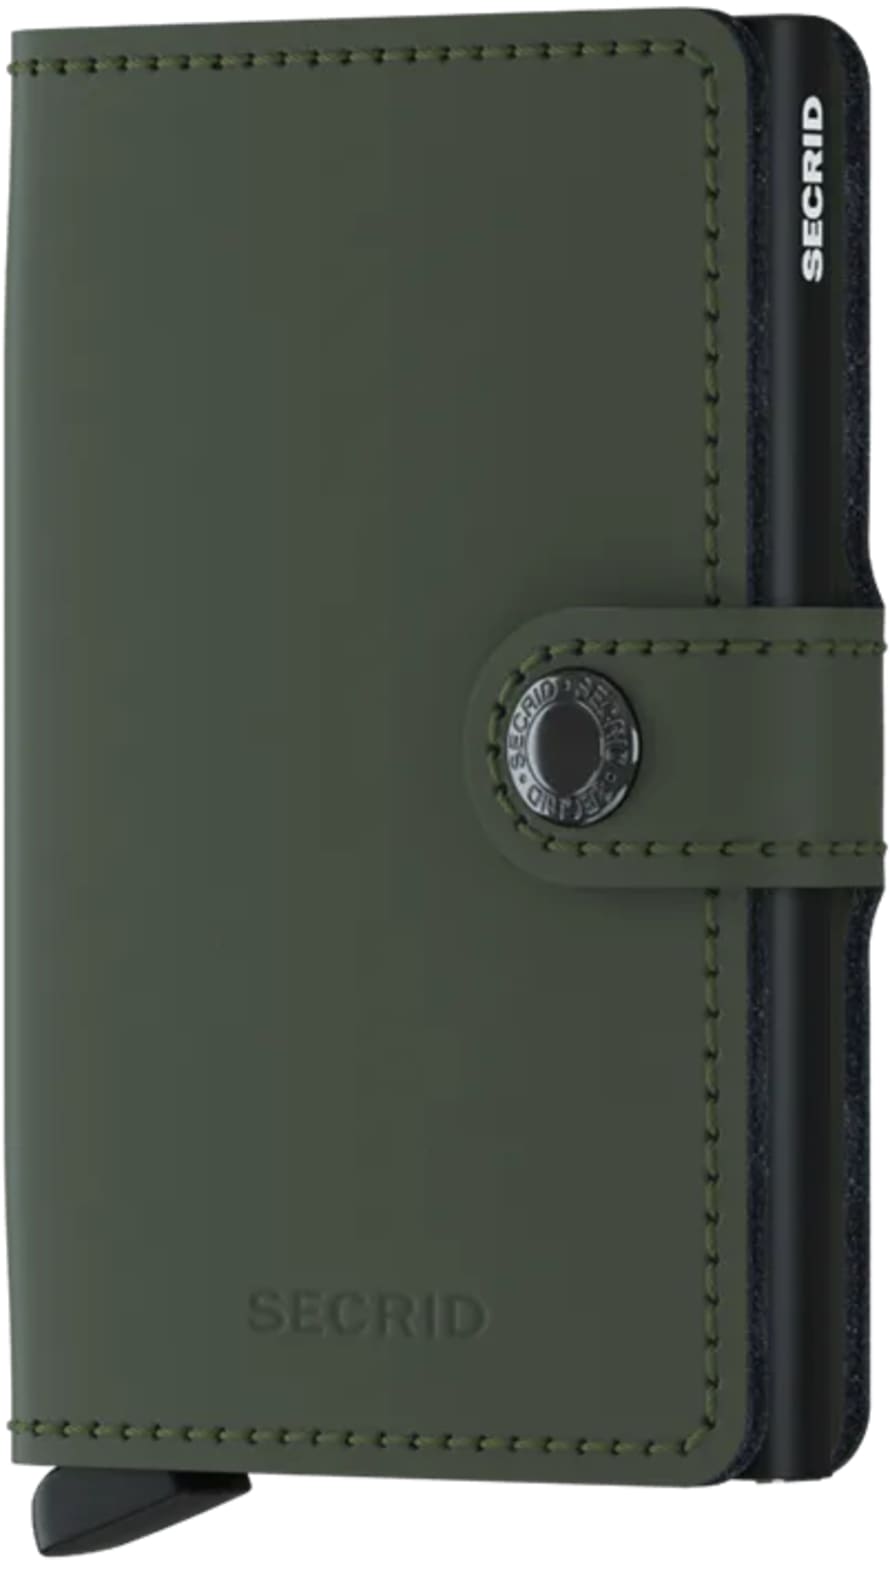 Secrid Miniwallet matte Green-Black 